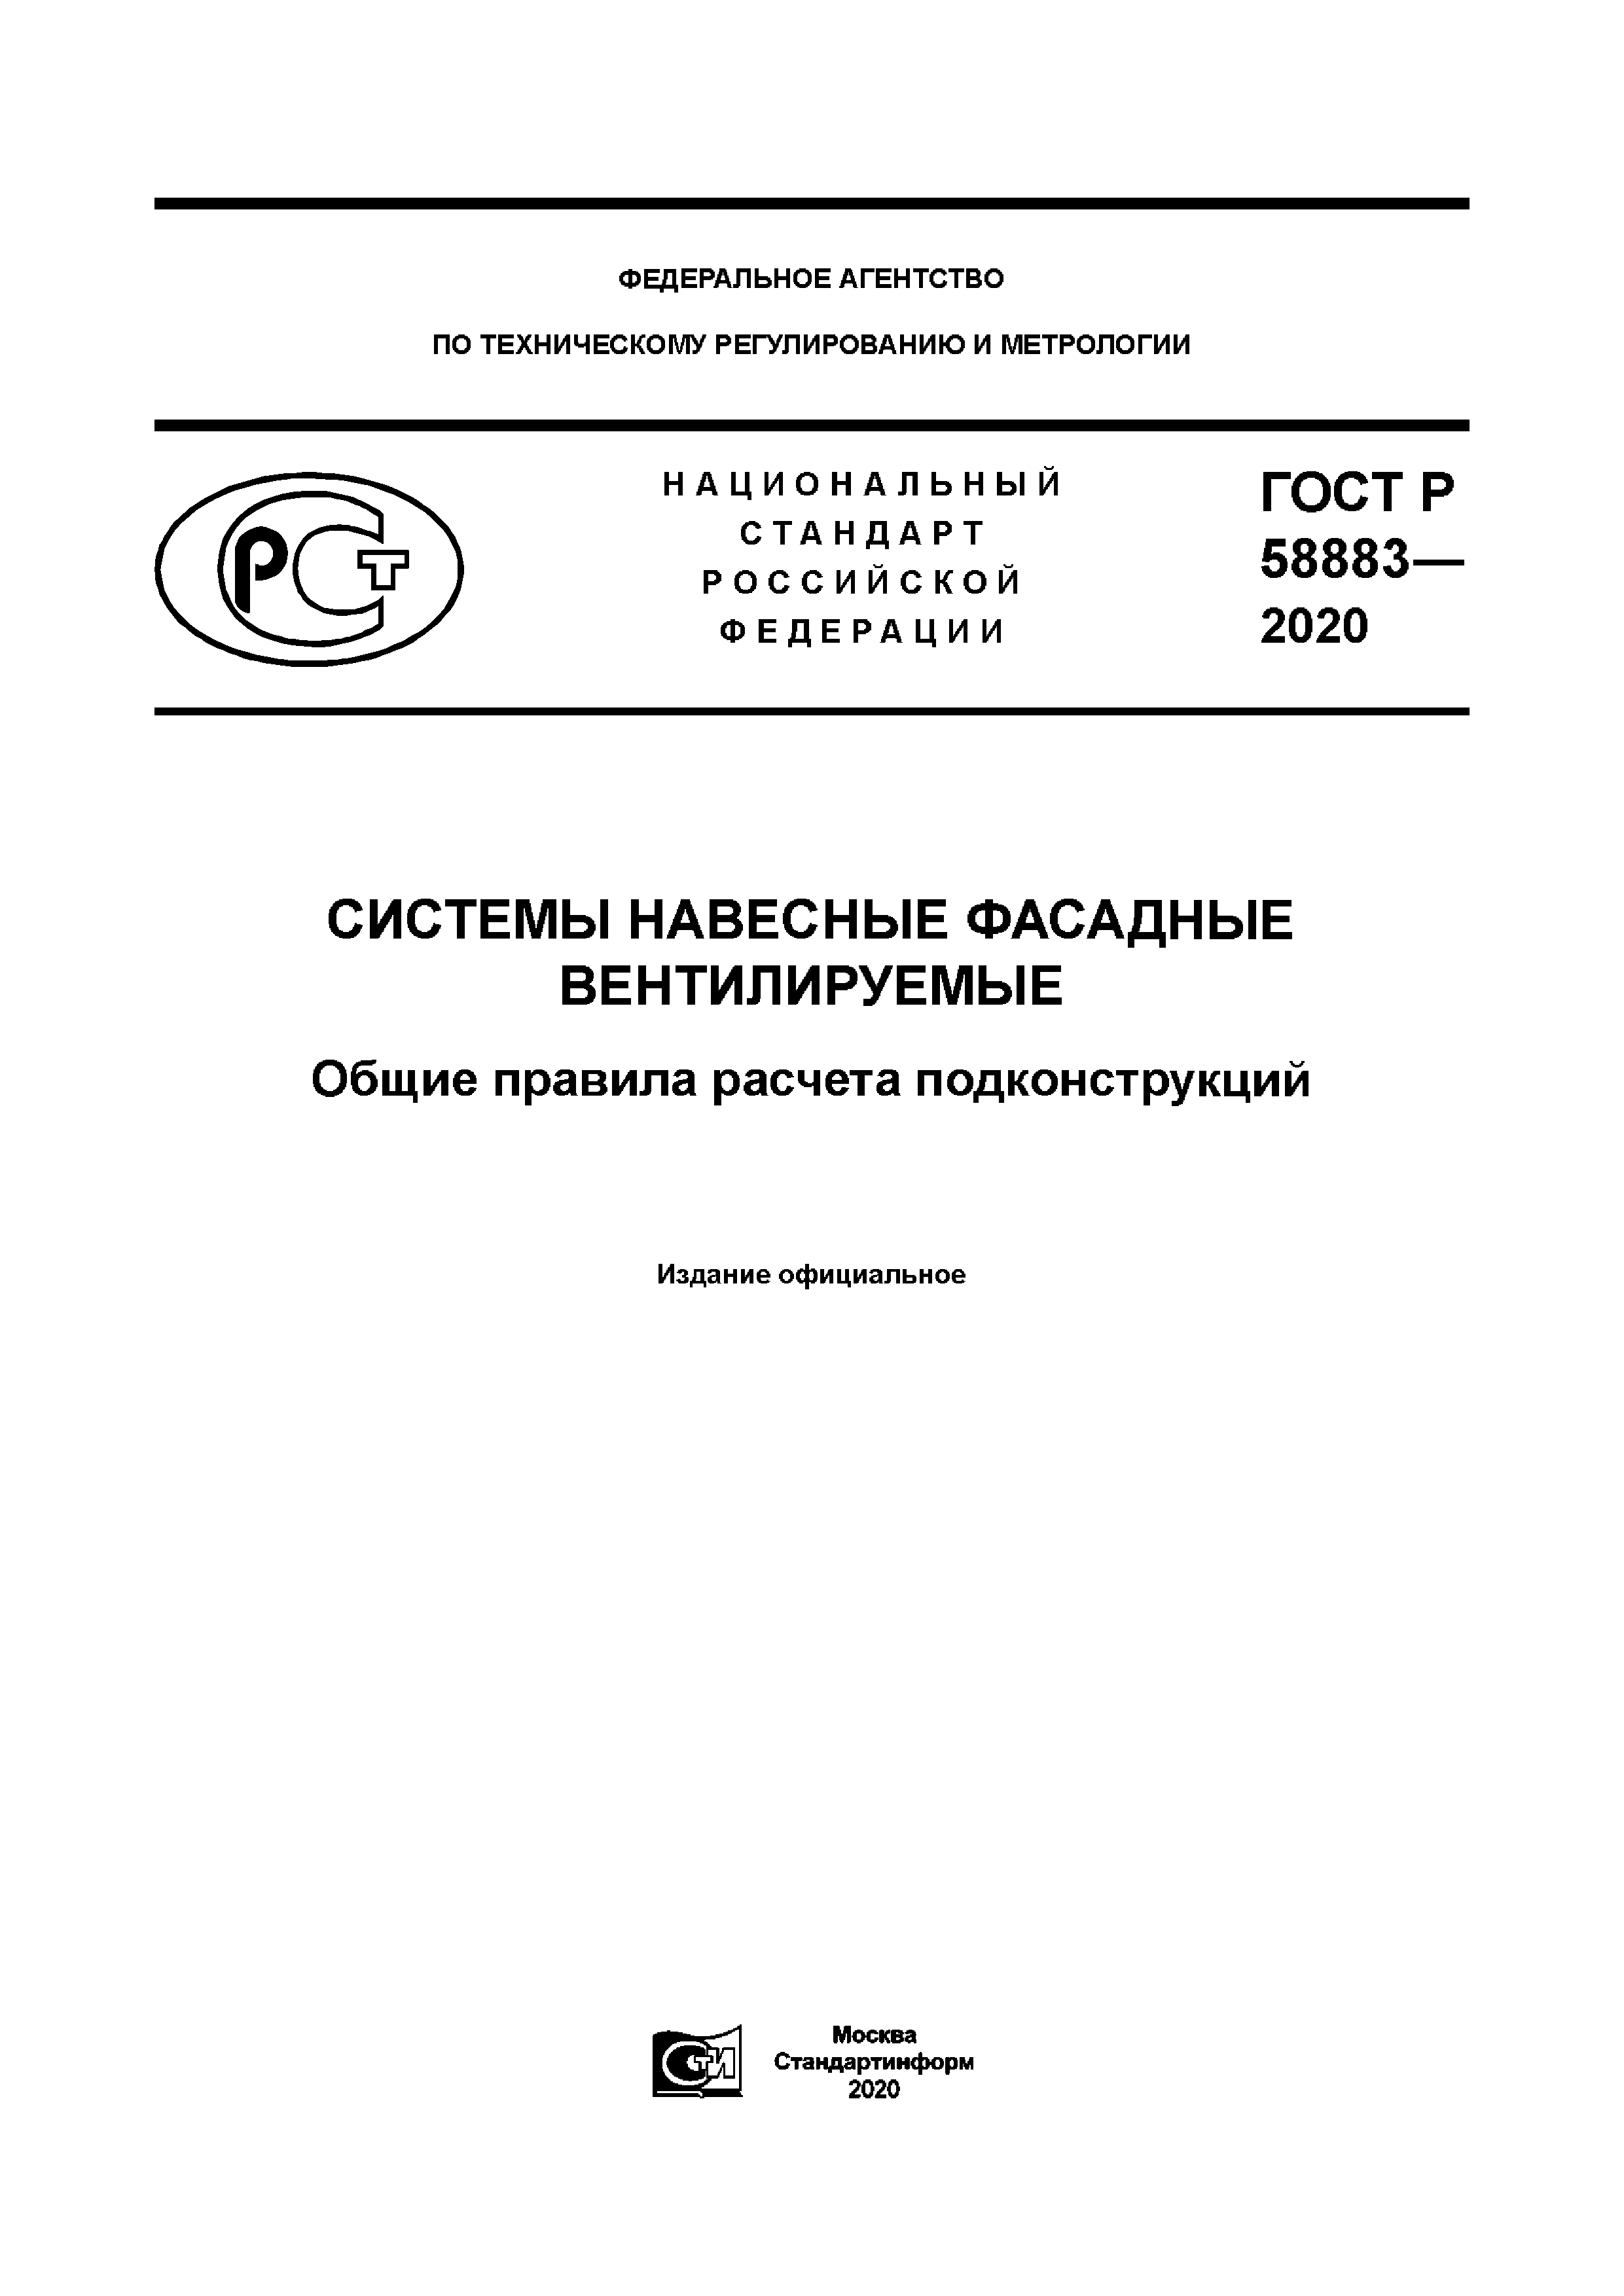 ГОСТ Р 58883-2020